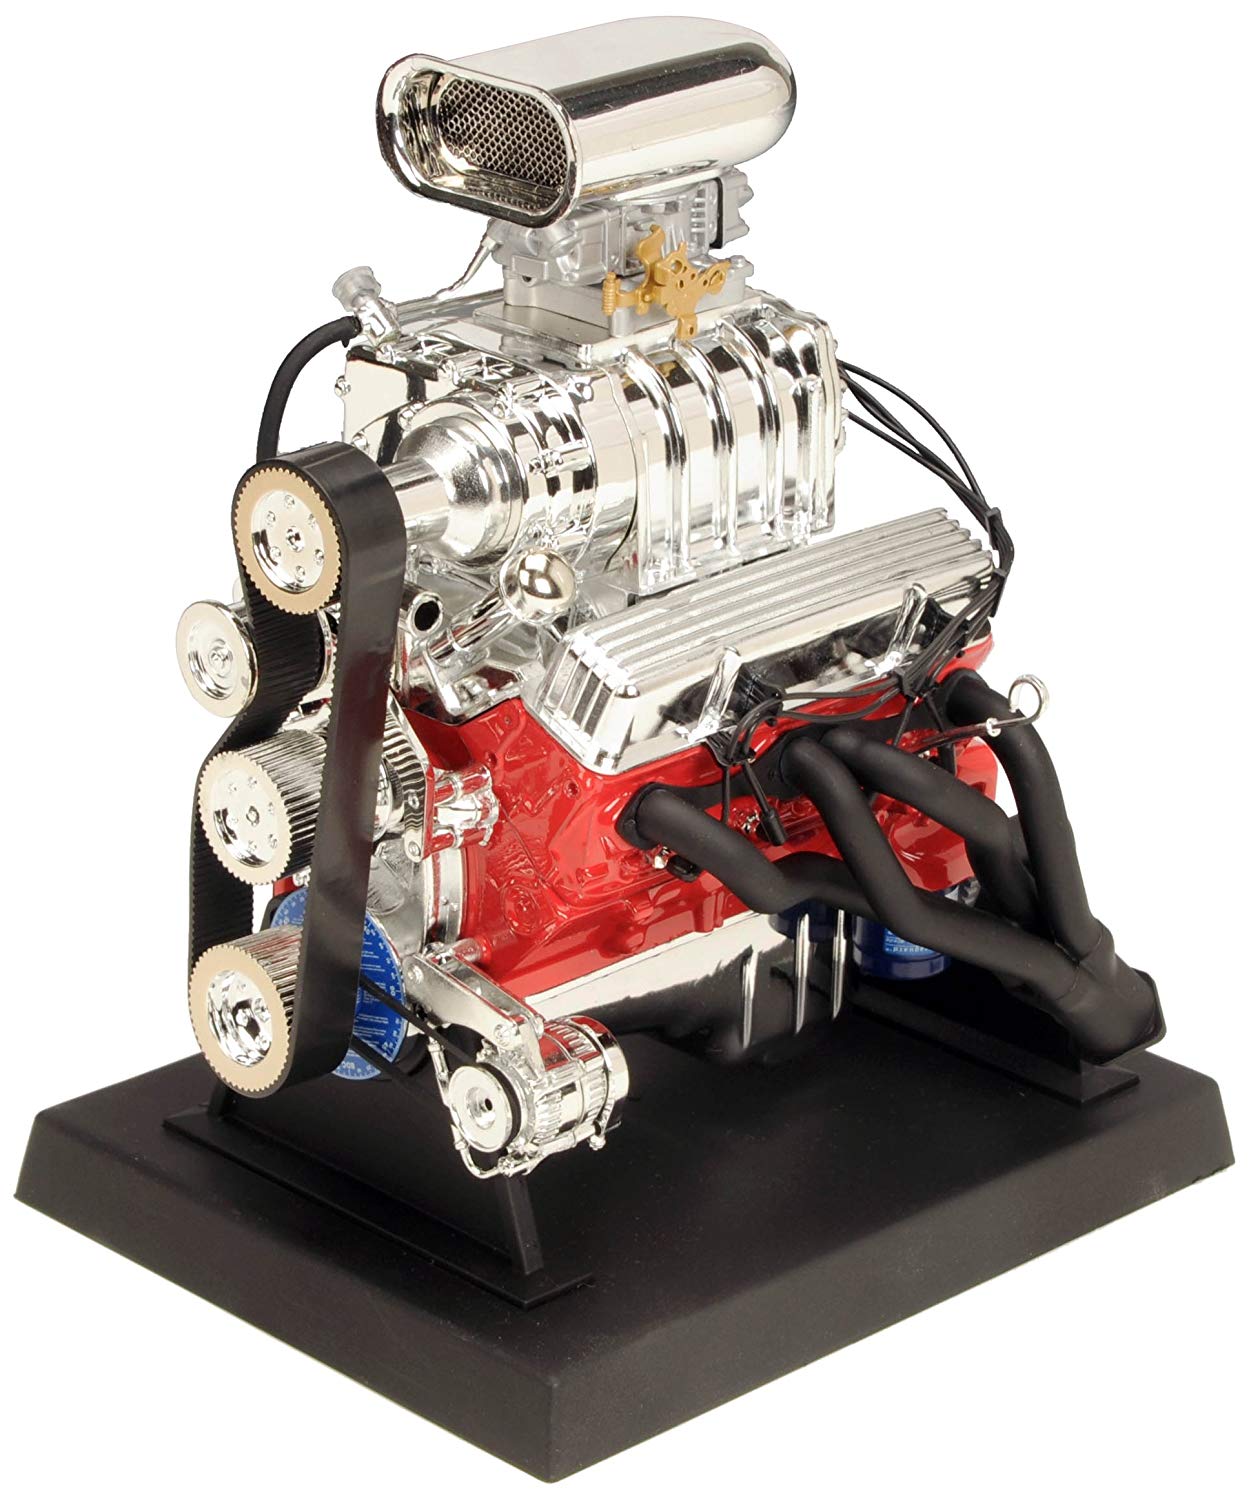 Engine Chevrolet Blown Hot Rod 1/6 Diecast Replica Model by Liberty Classics